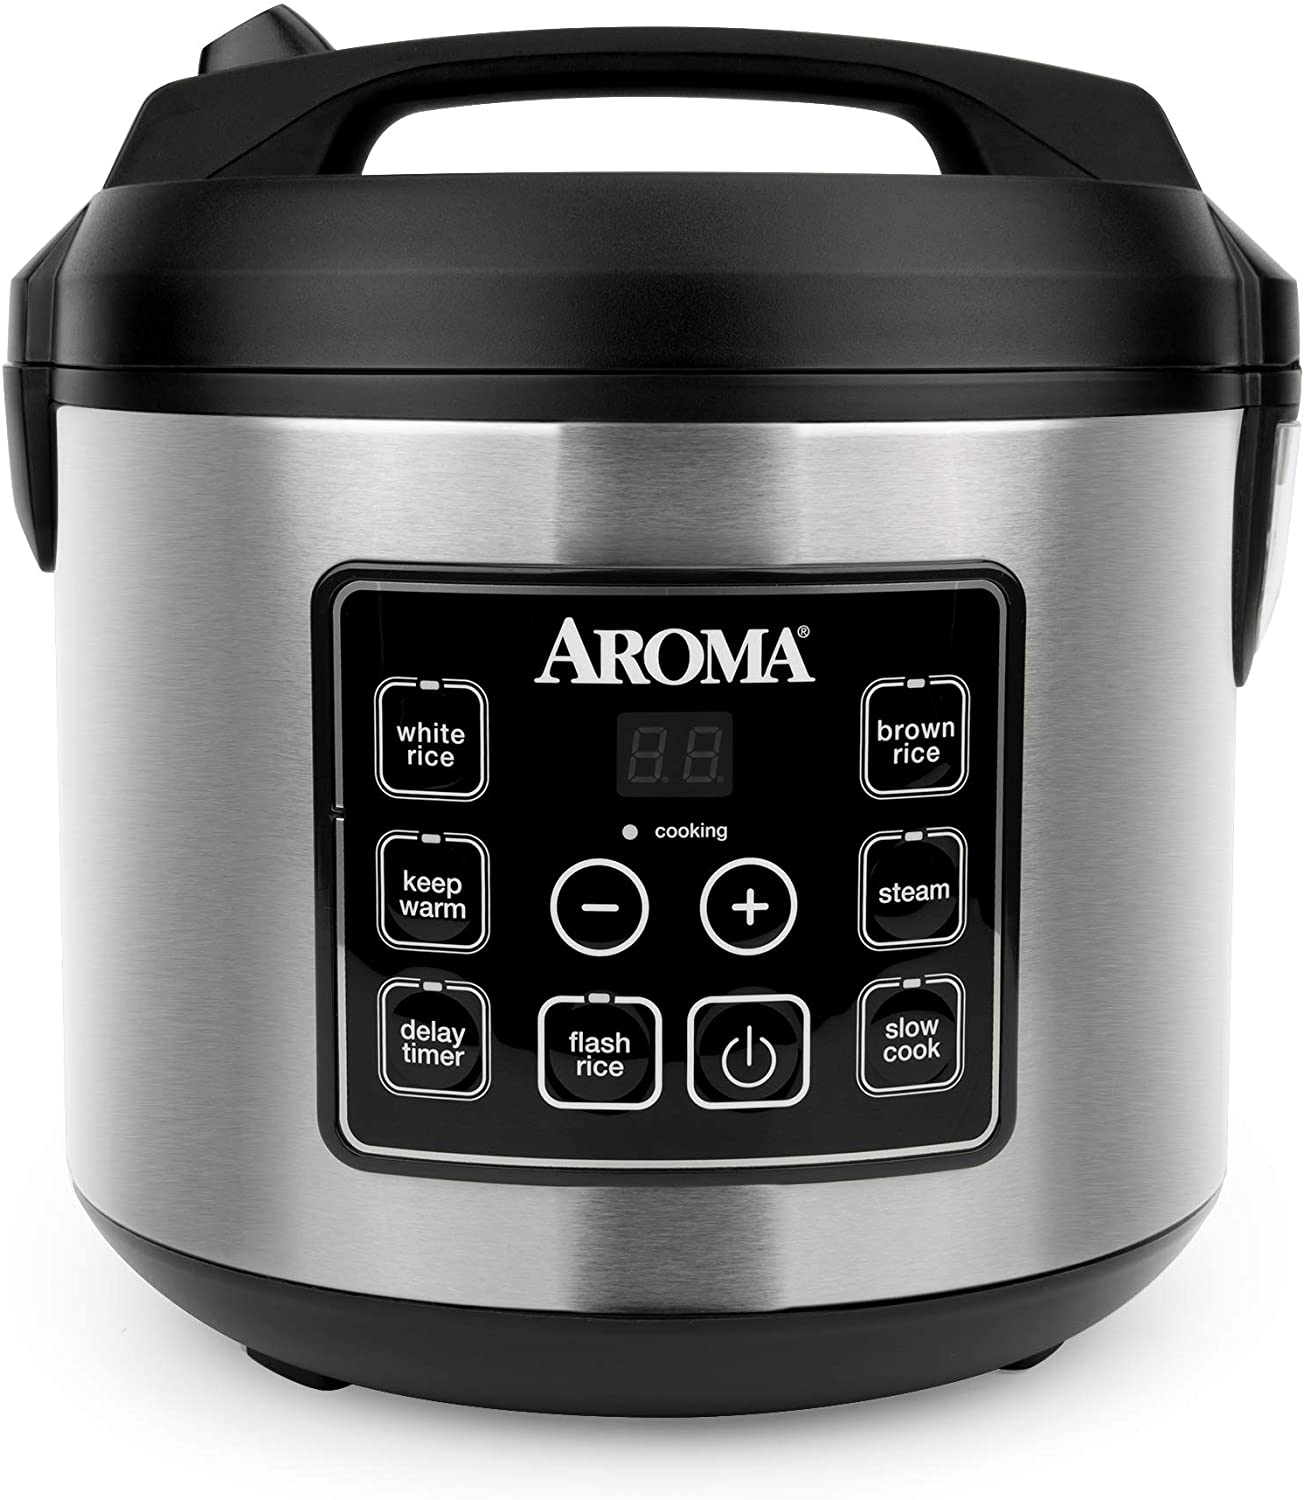 https://www.dontwasteyourmoney.com/wp-content/uploads/2019/12/aroma-housewares-digital-rice-cooker-20-cup.jpg